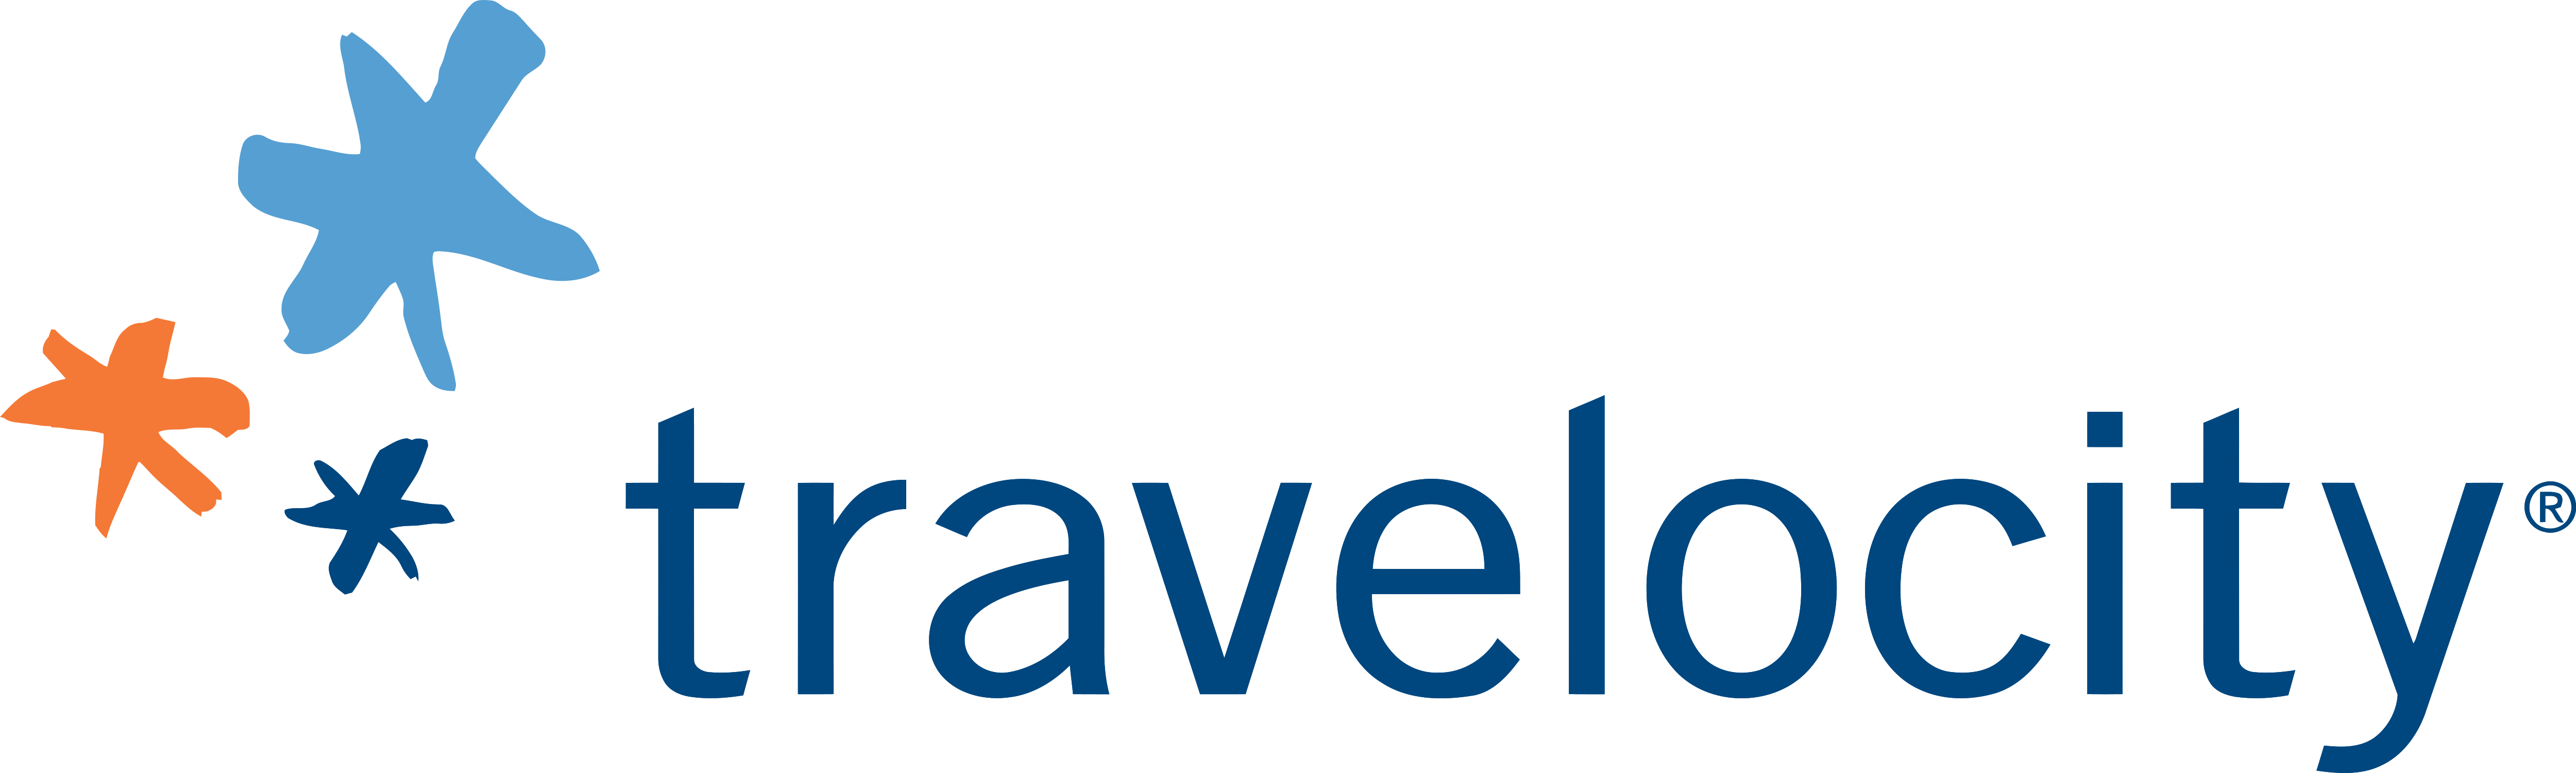 Travelocity – Logos Download